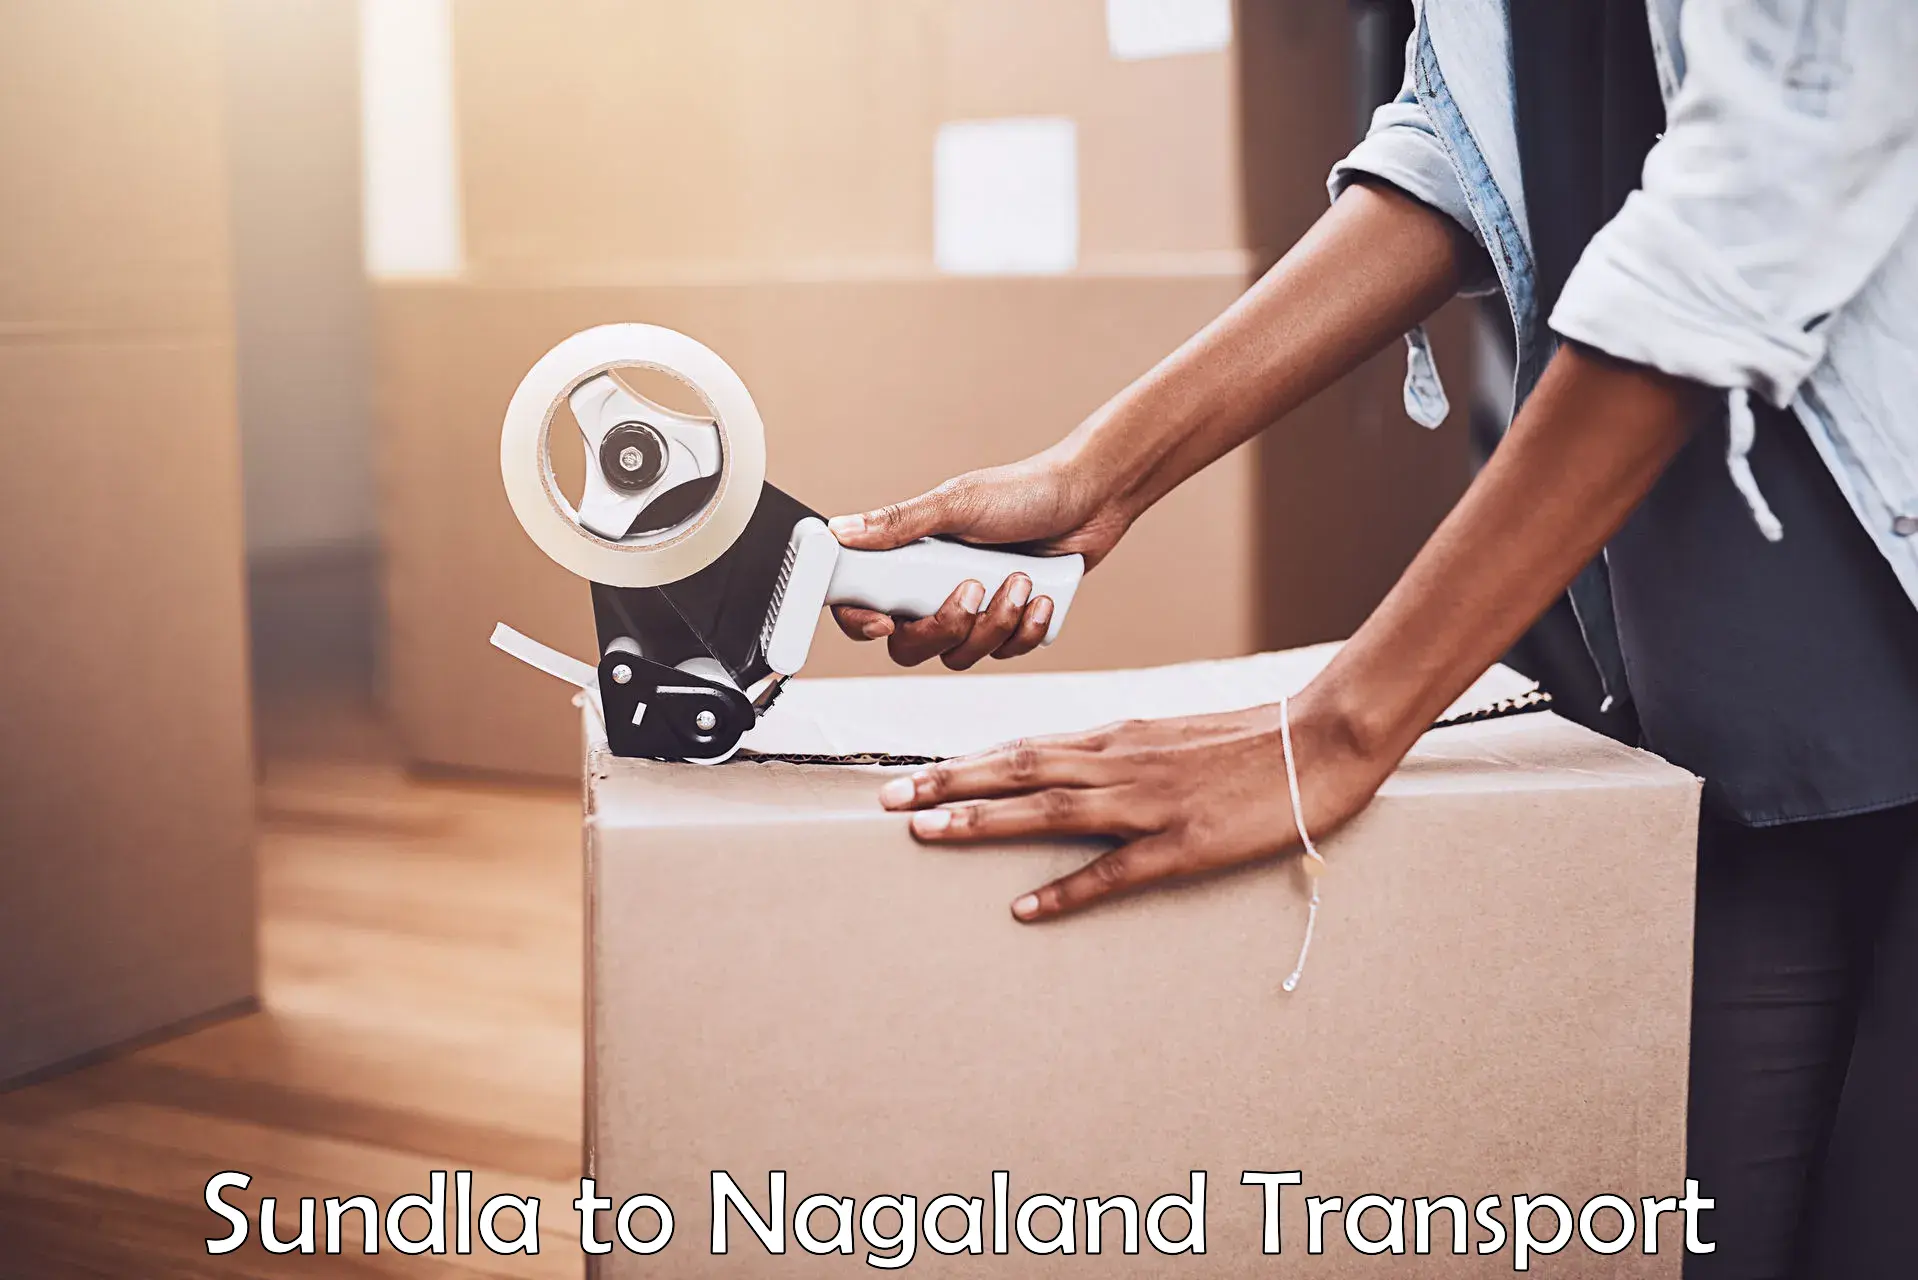 Transport in sharing in Sundla to Nagaland